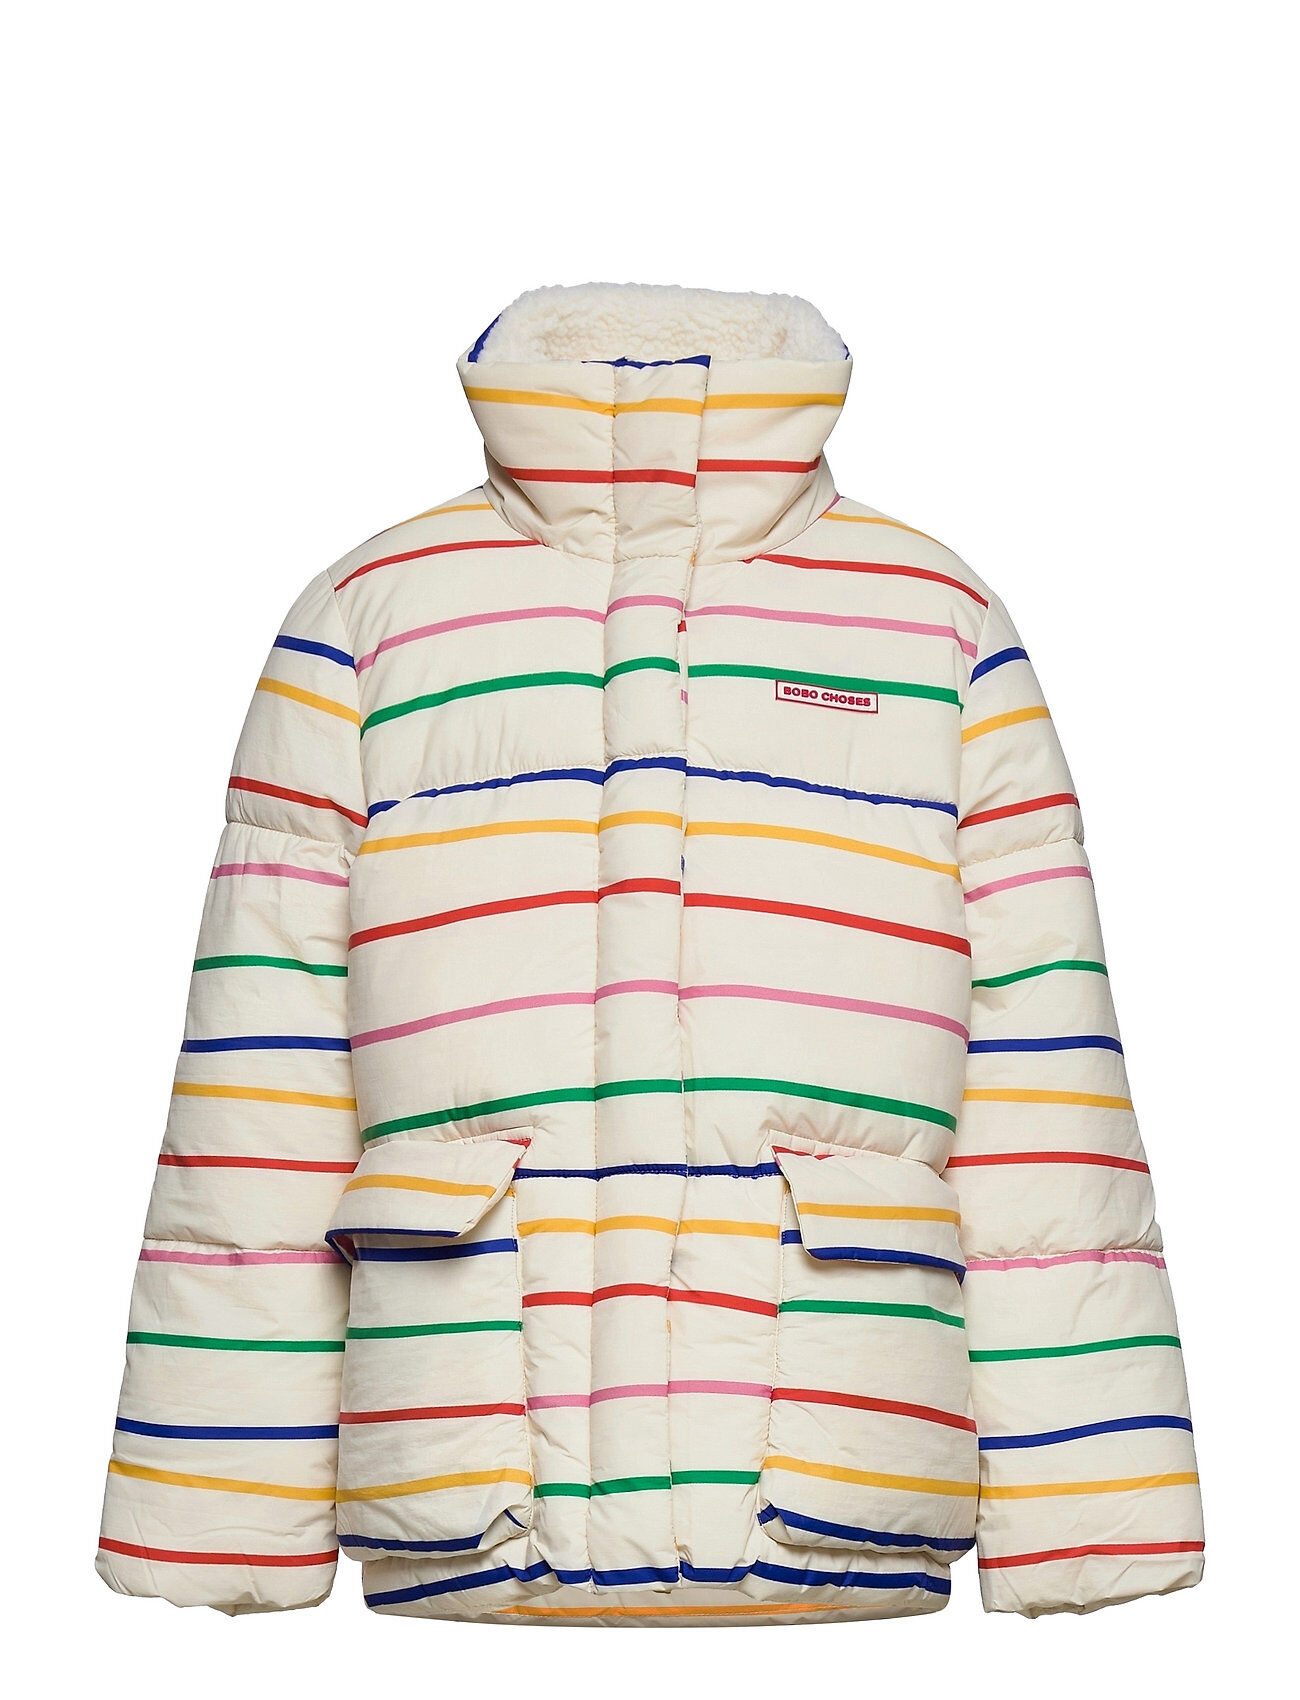 Bobo Choses Multicolor Stripes Padded Jacket Fôret Jakke Multi/mønstret Bobo Choses